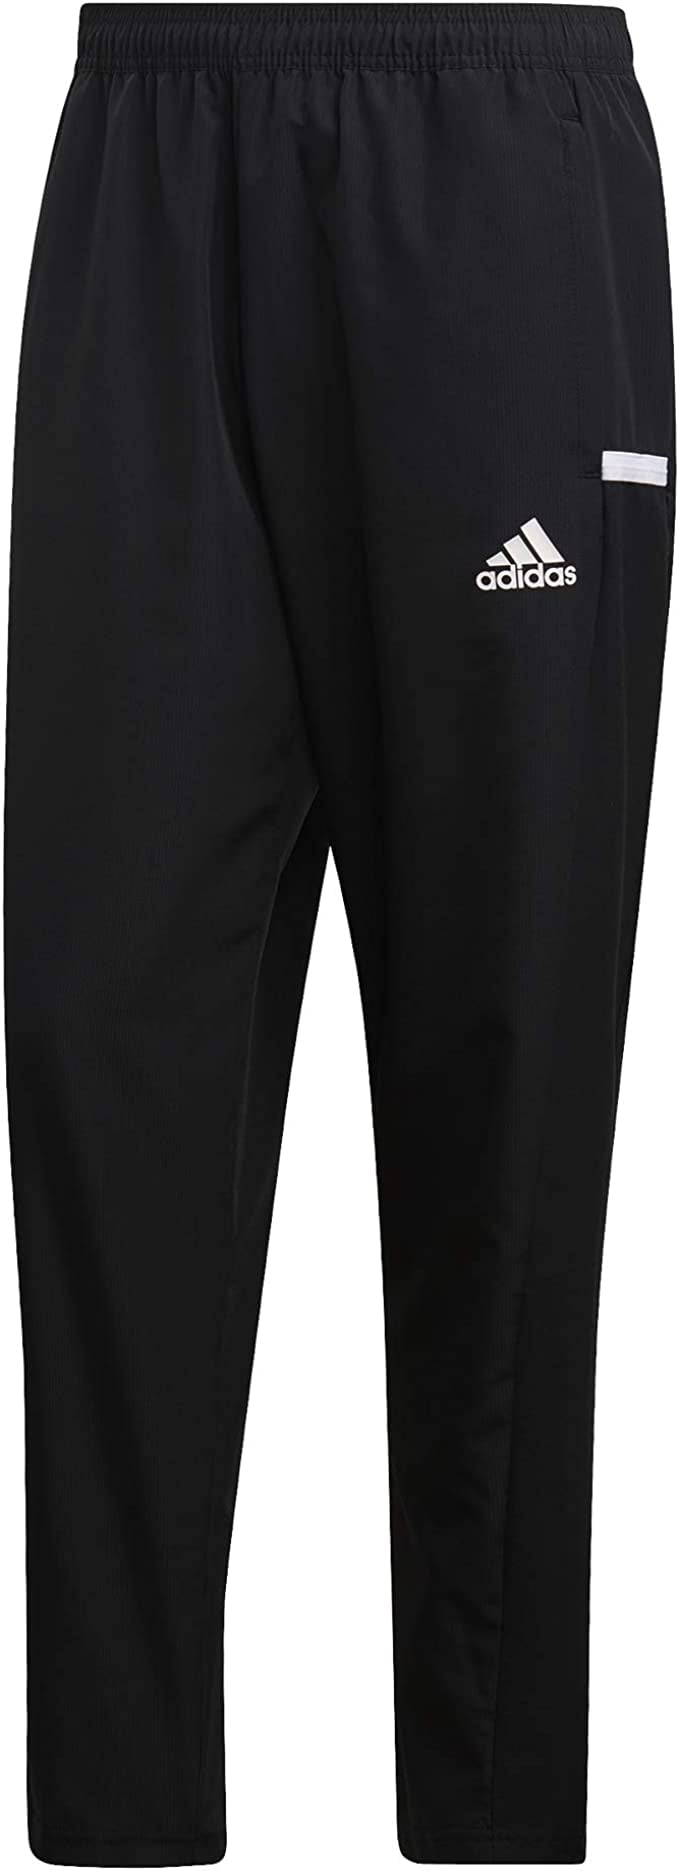 DW6869 Adidas Mens Team 19 Woven Pants Black/White XL - Walmart.com